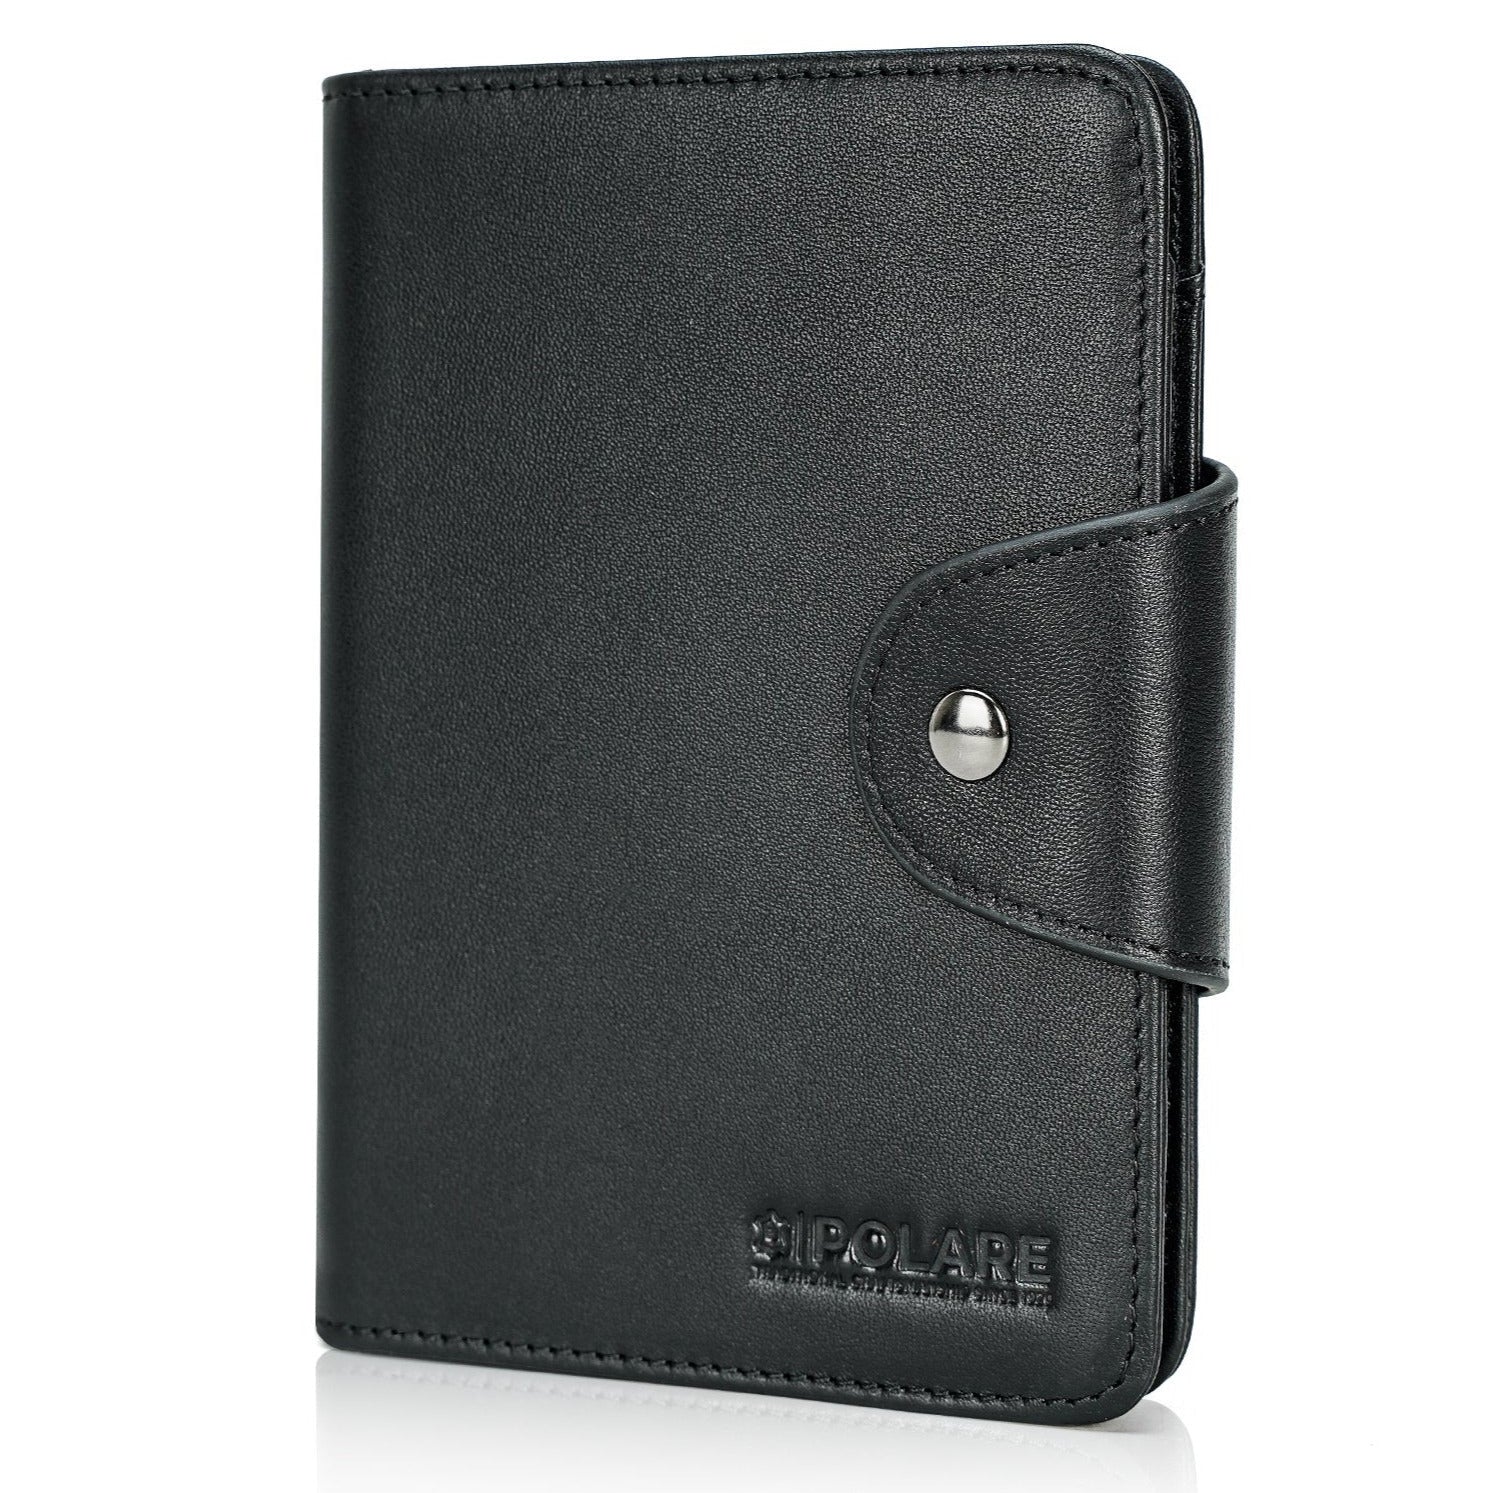 Polare Full Grain Leather Slim and Soft RFID Blocking Passport Wallet (Black)